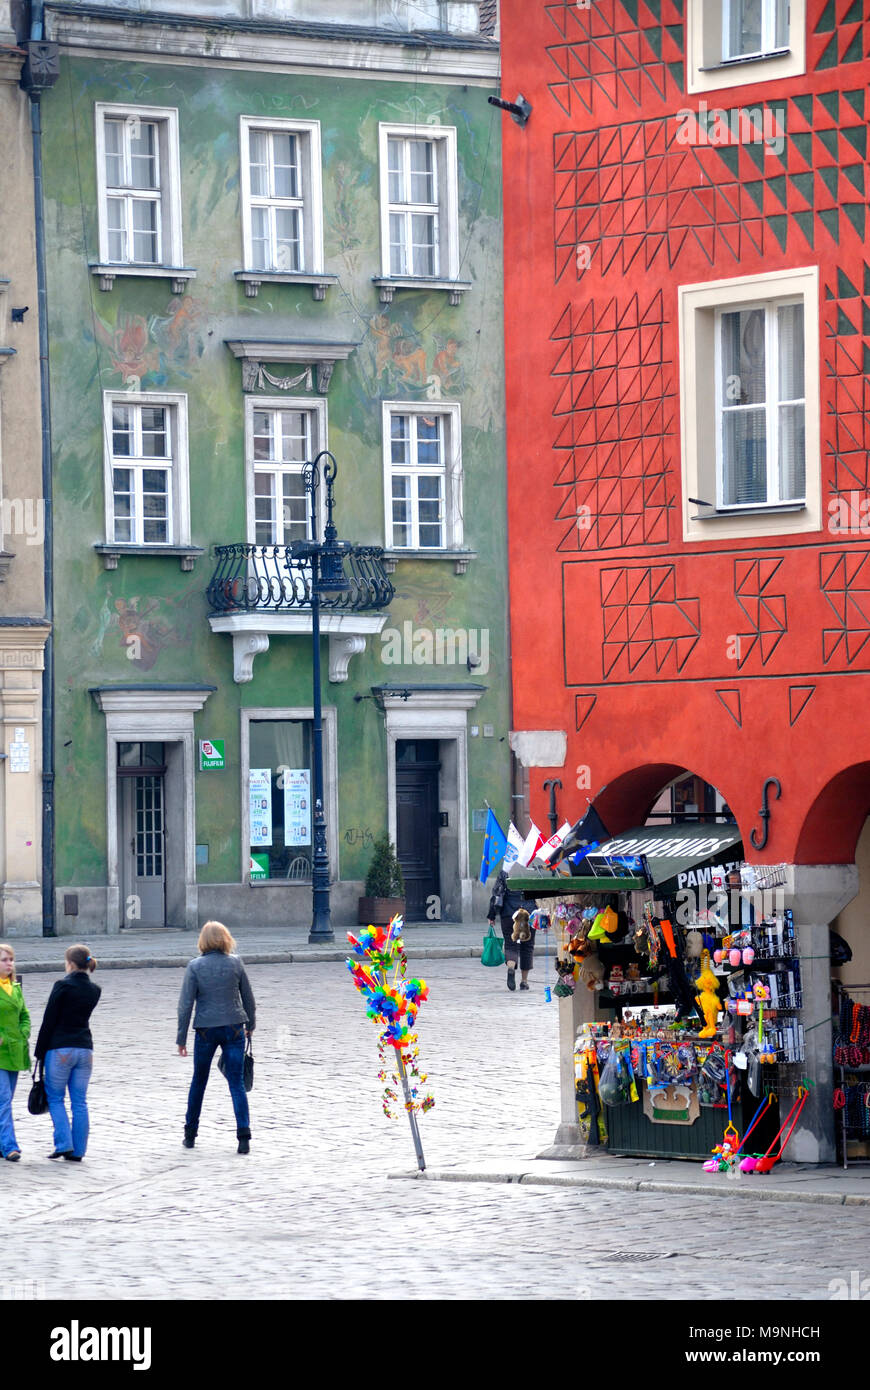 Poznan, Wielkopolska, Poland. Market Square or Rynek. Market traders' Houses. Souvenir stalls in the arches Stock Photo